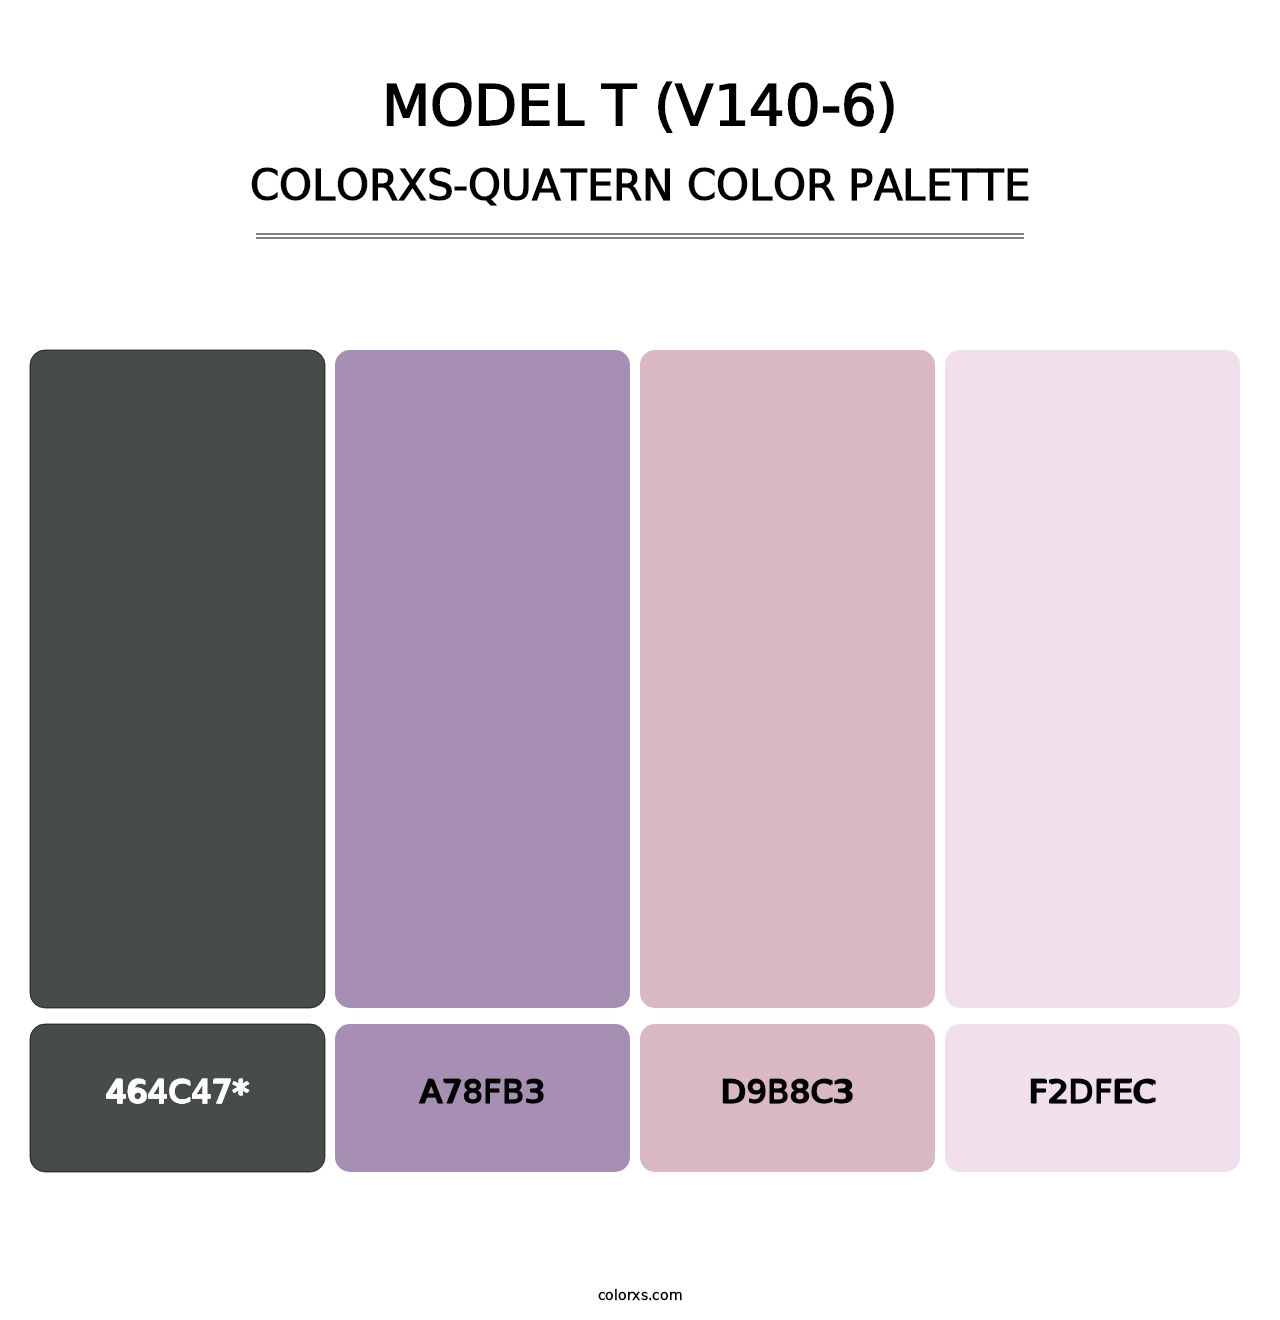 Model T (V140-6) - Colorxs Quatern Palette